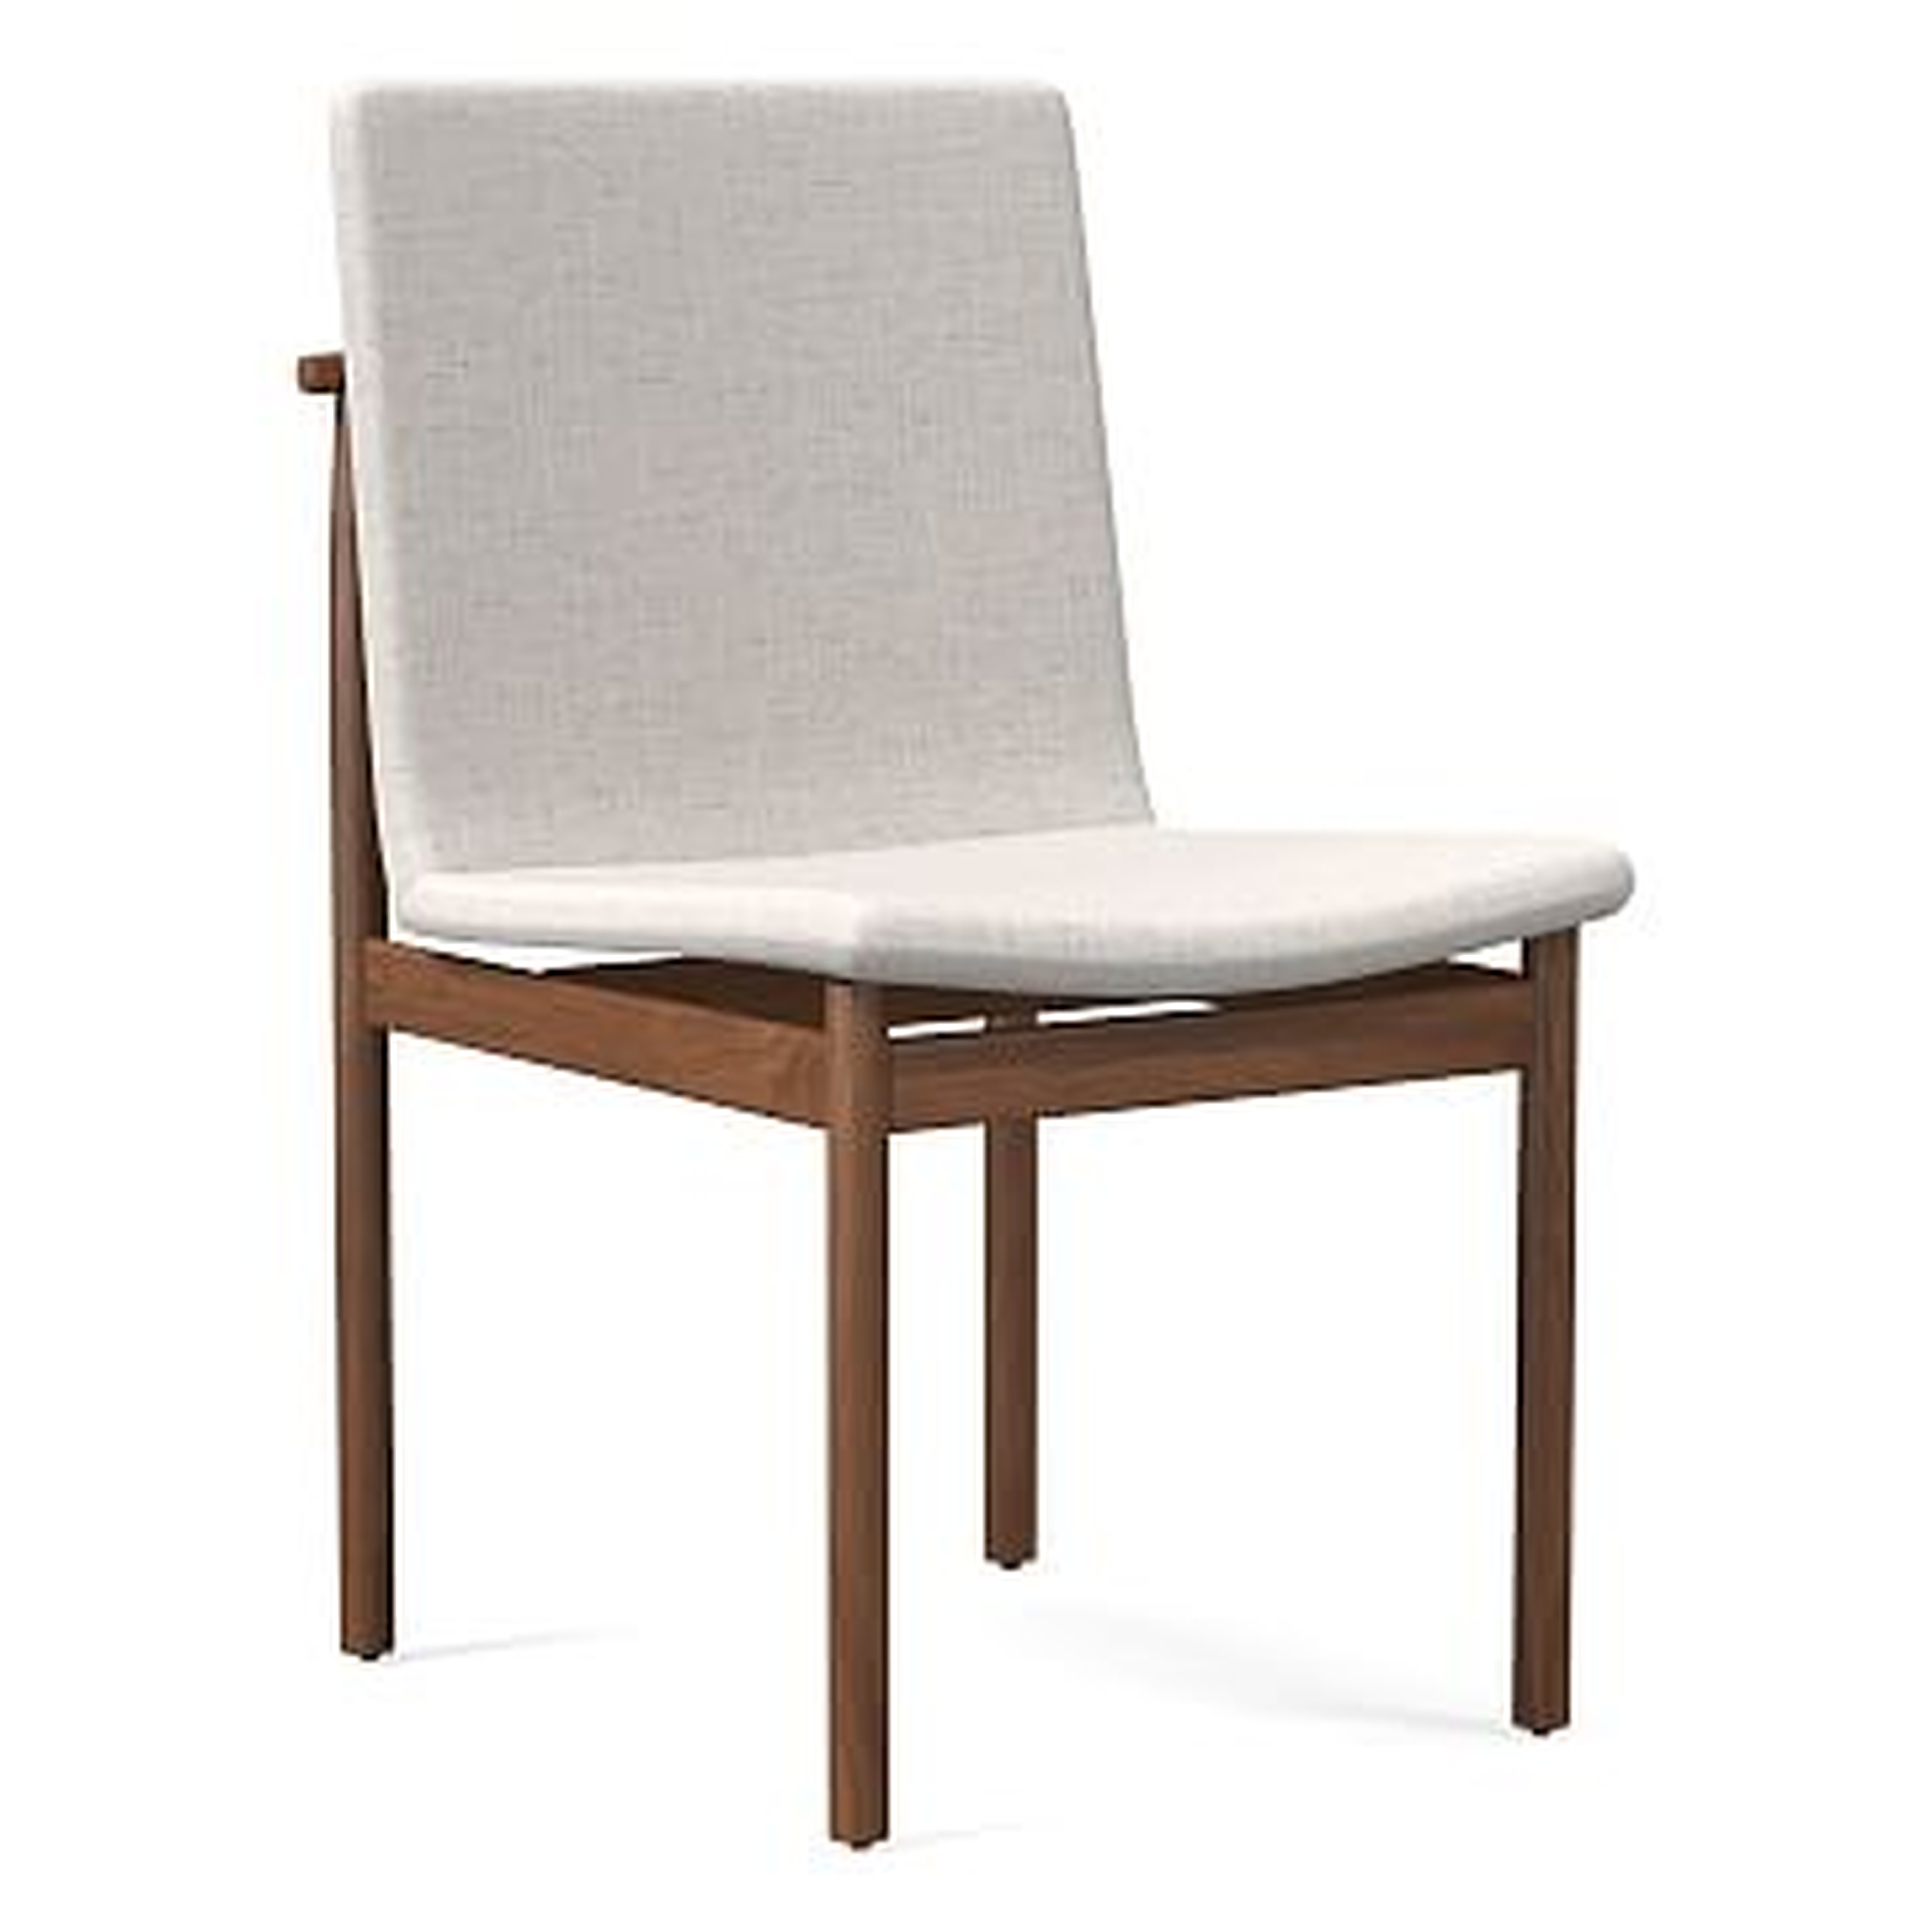 Framework Dining Chair, Performance Coastal Linen, White, Walnut - West Elm